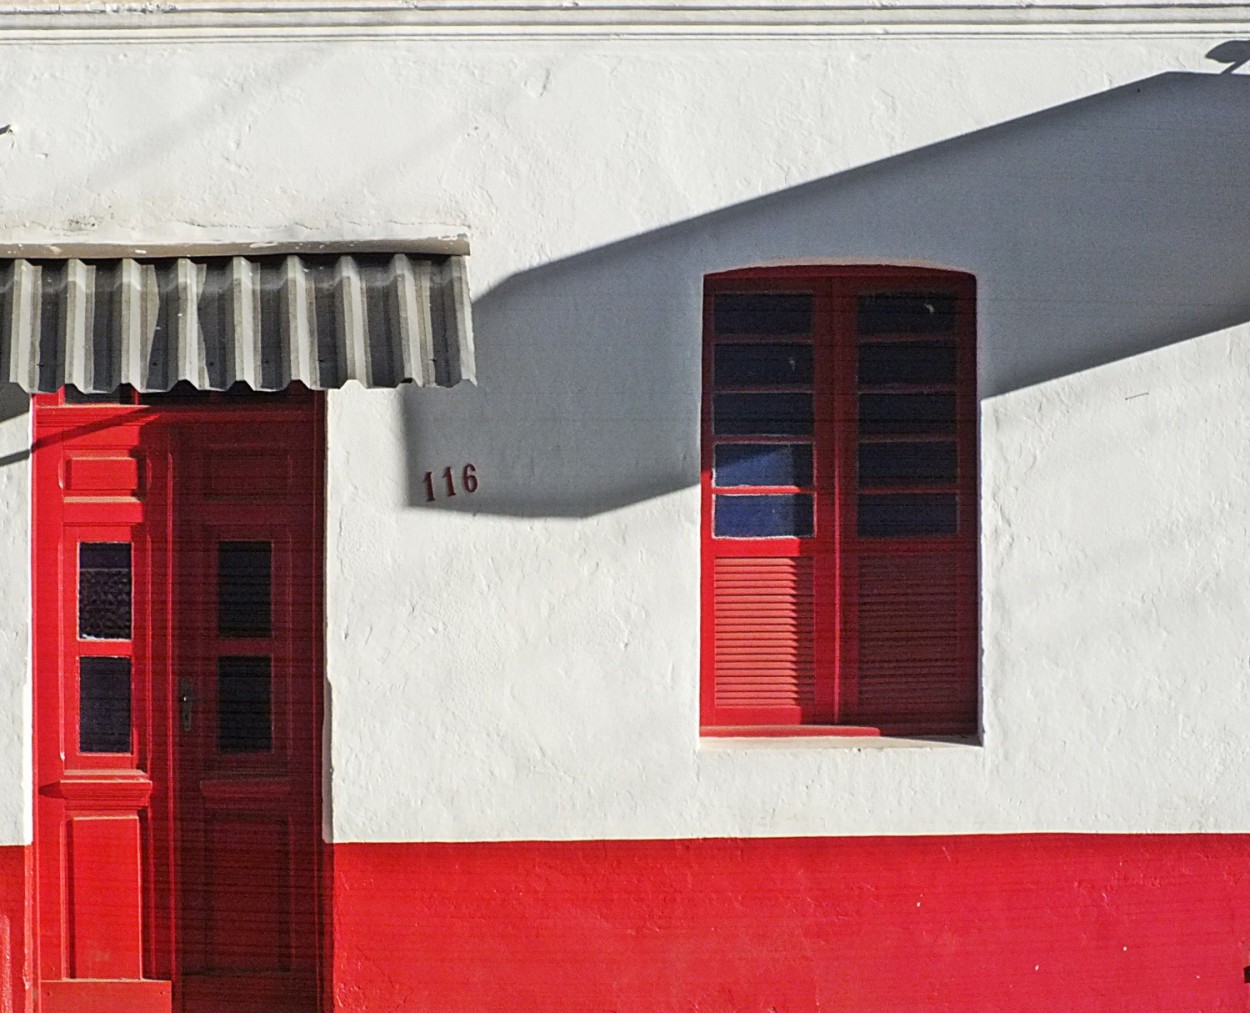 "The red house number 116" de Decio Badari